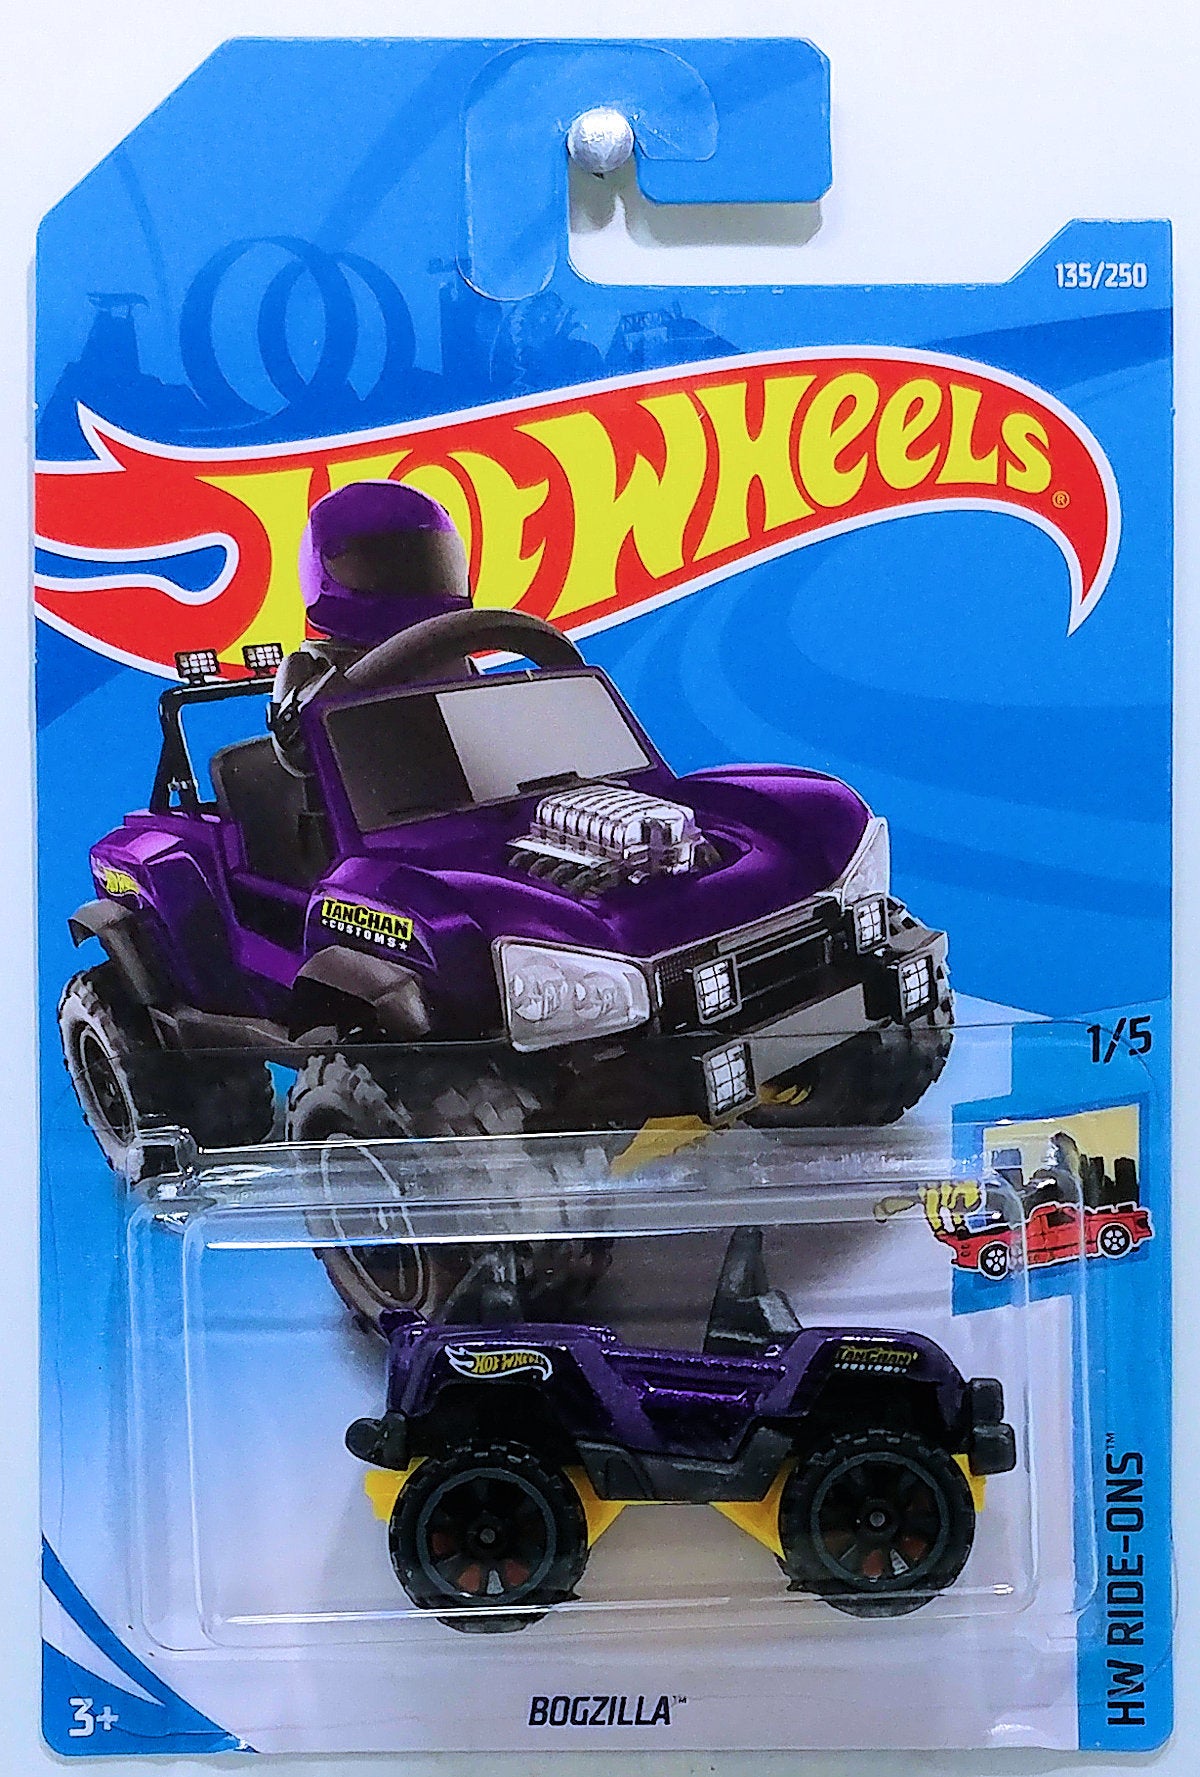 Hot Wheels 2019 - Collector # 135/250 - HW Ride-Ons 1/5 - Bogzilla - Purple - IC